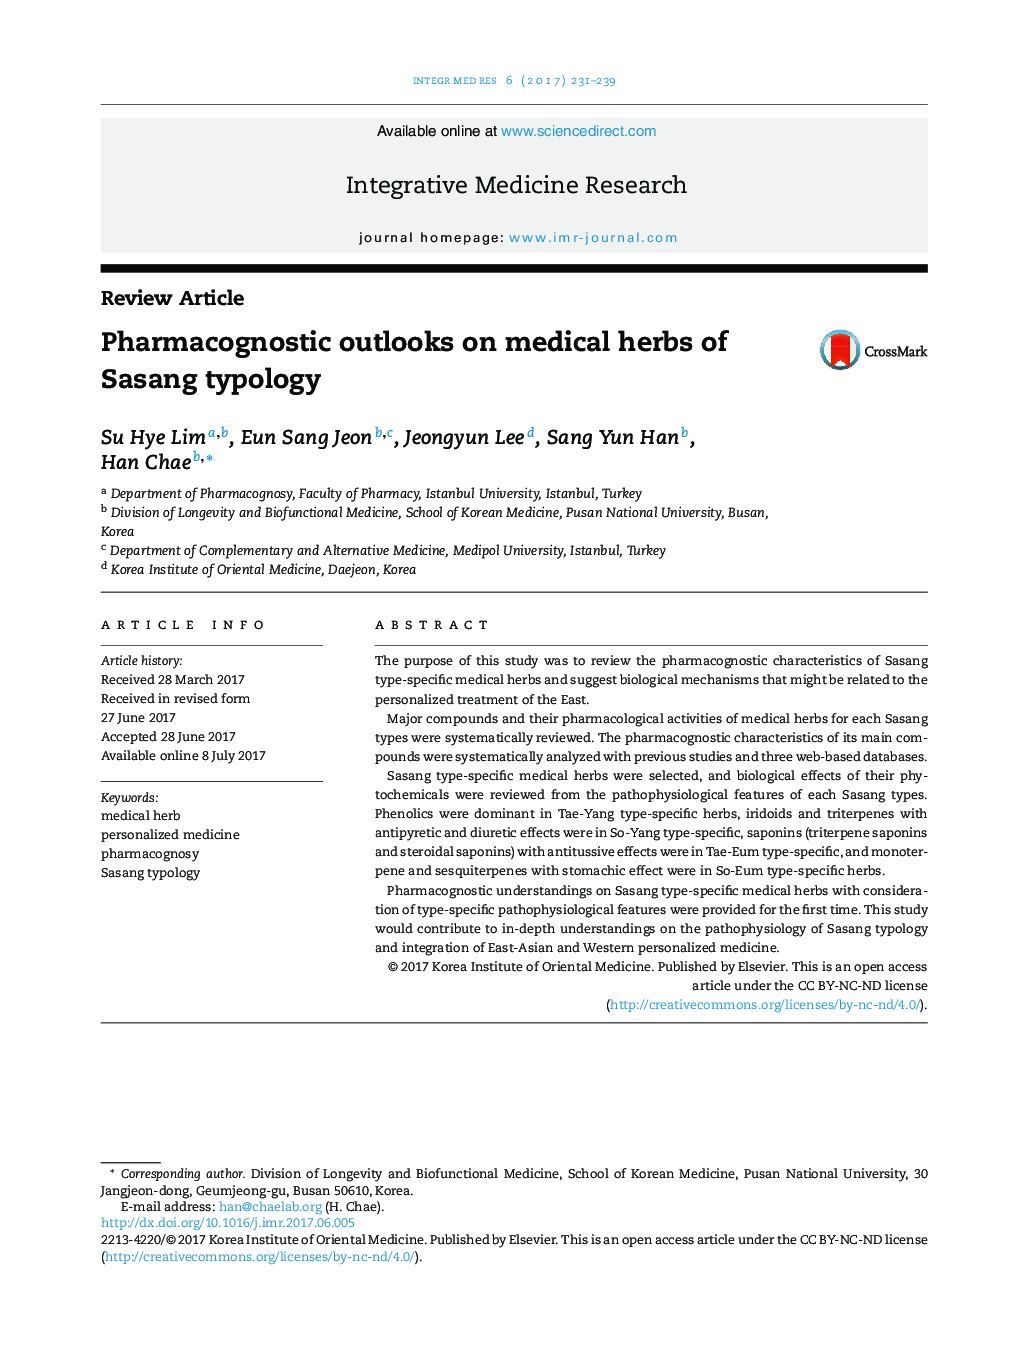 Pharmacognostic outlooks on medical herbs of Sasang typology